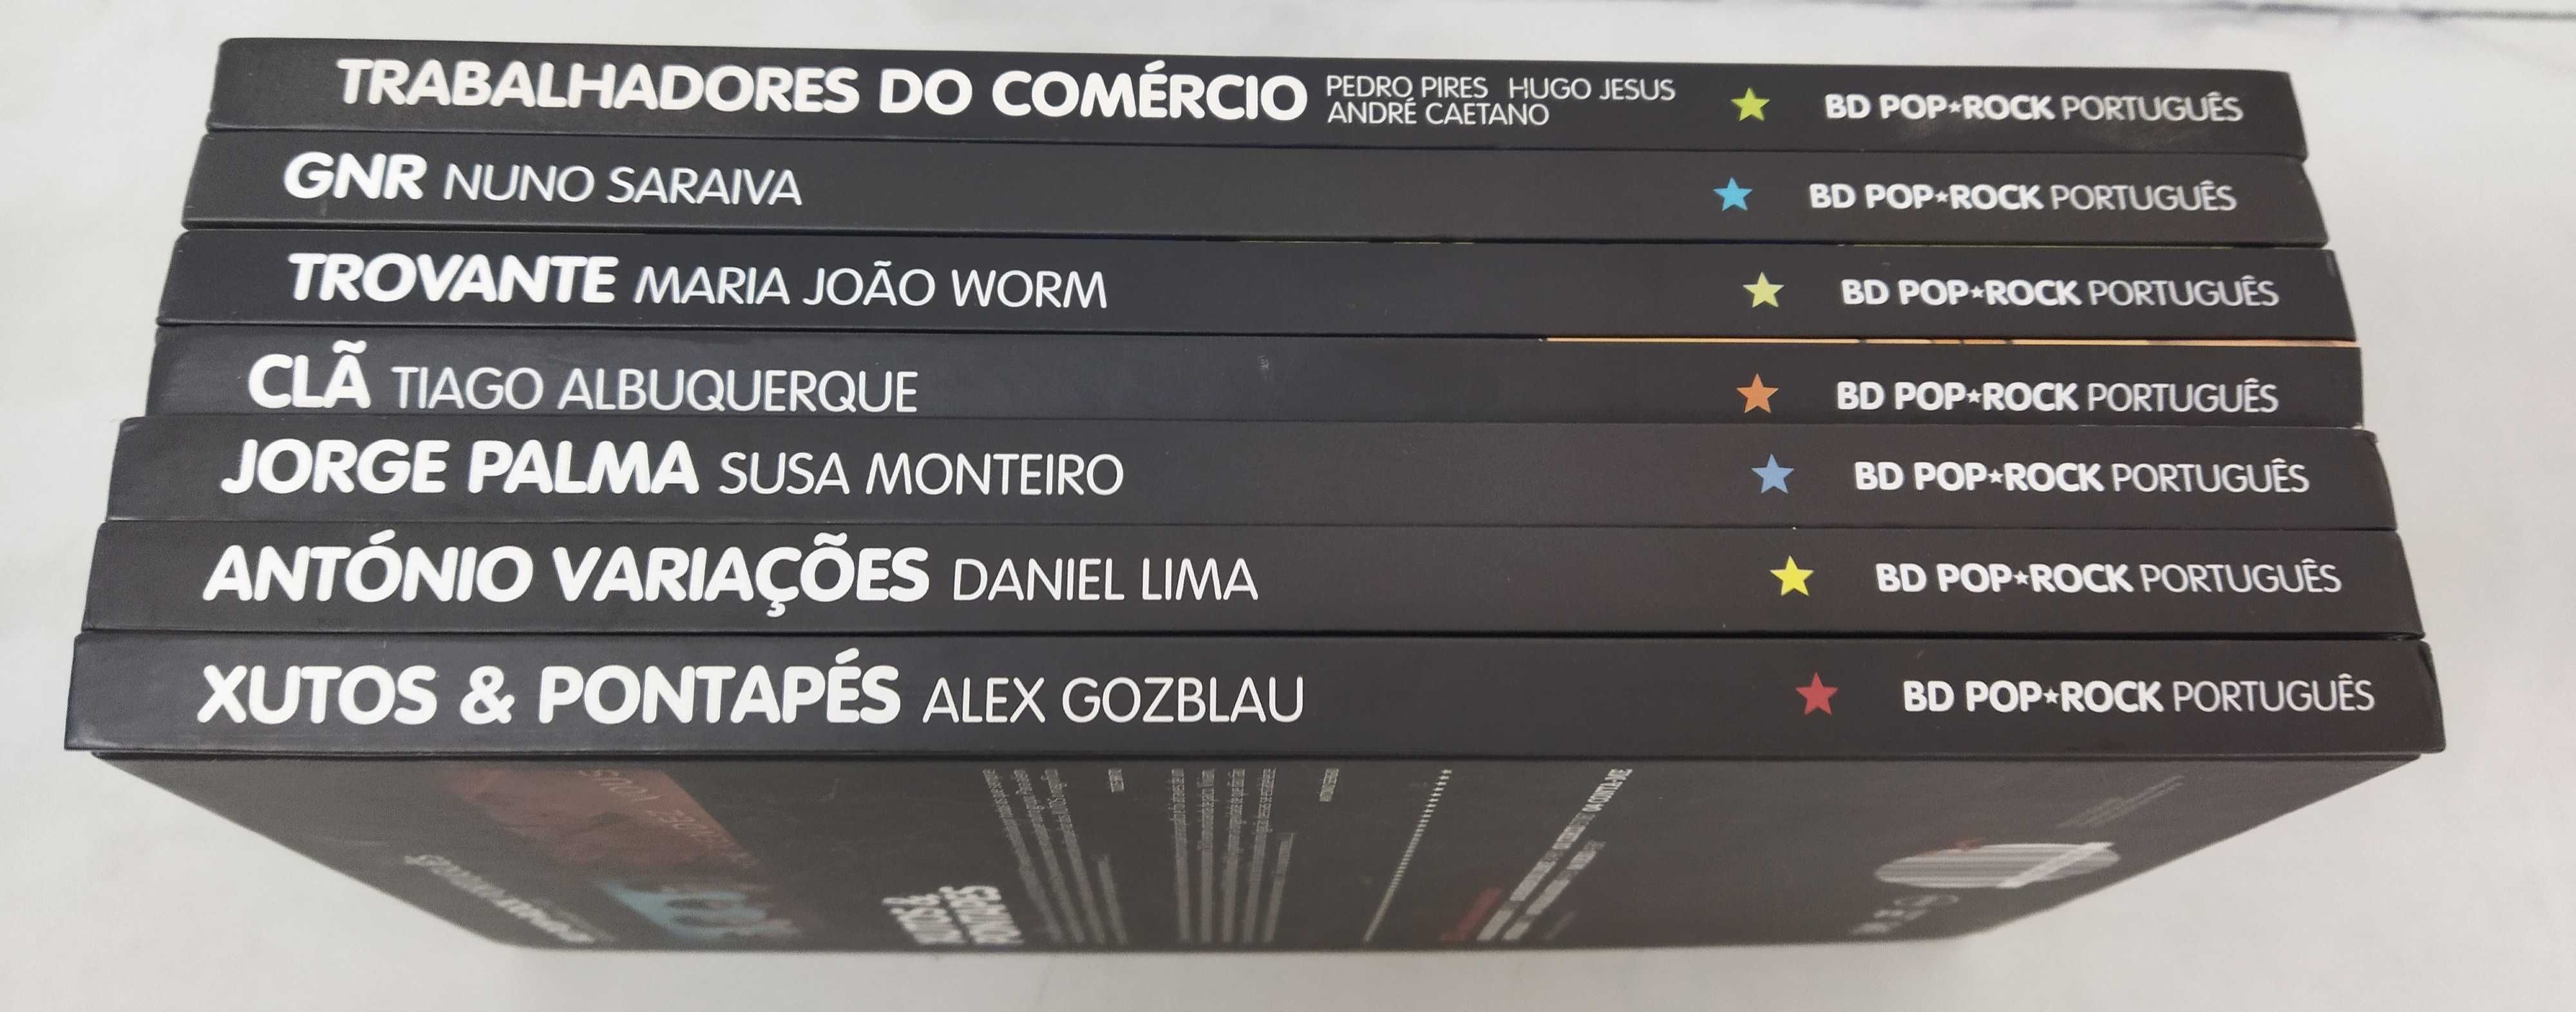 Lote CD+LIVRO BD Pop-Rock Português  7 Volumes